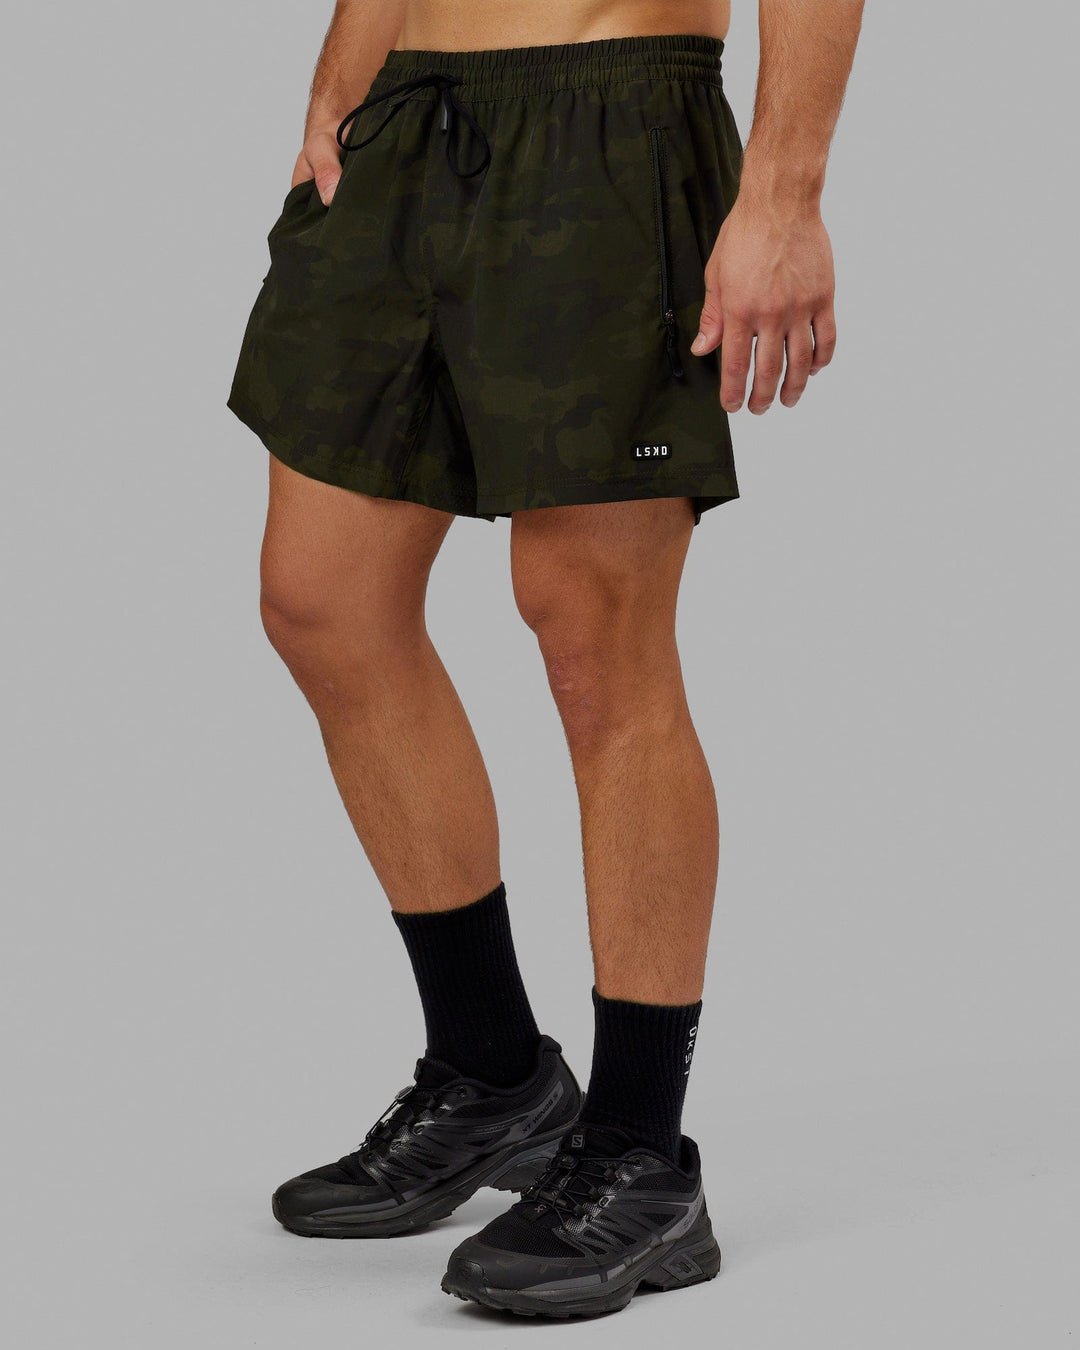 Man wearing Rep 5" Performance Short - Dark Olive Camo